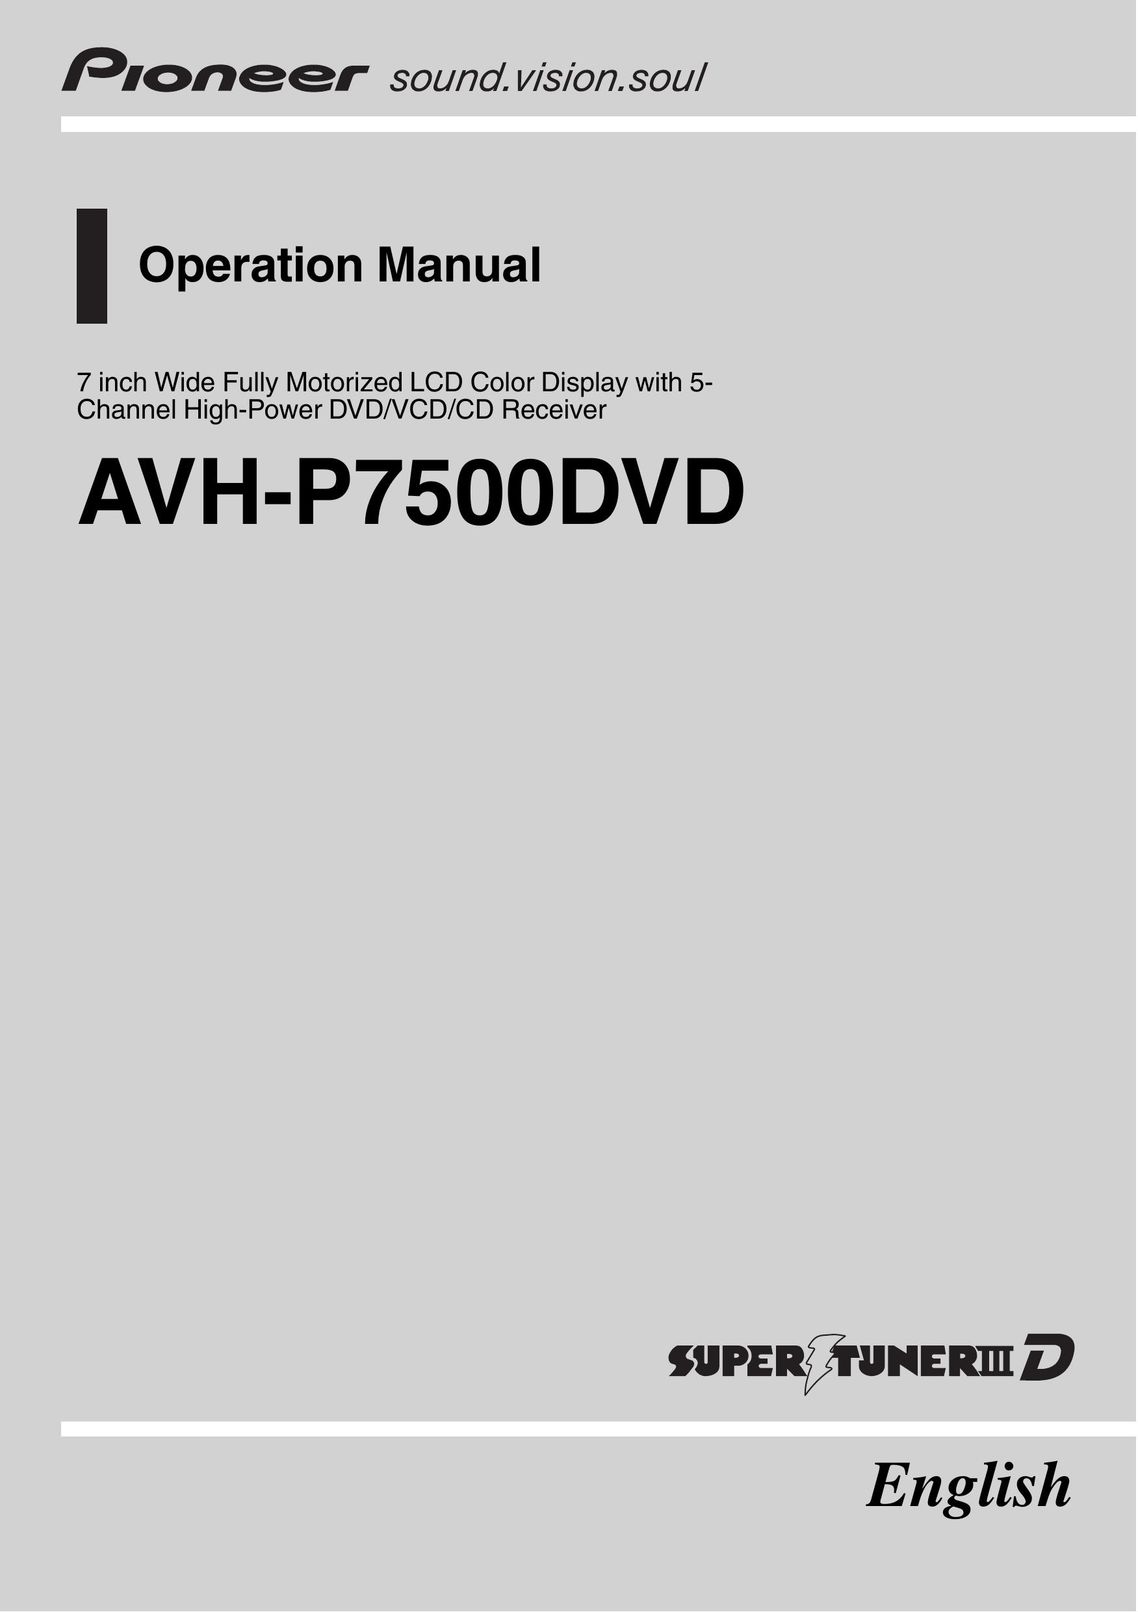 Pioneer AVH-P7500DVD DVD Recorder User Manual